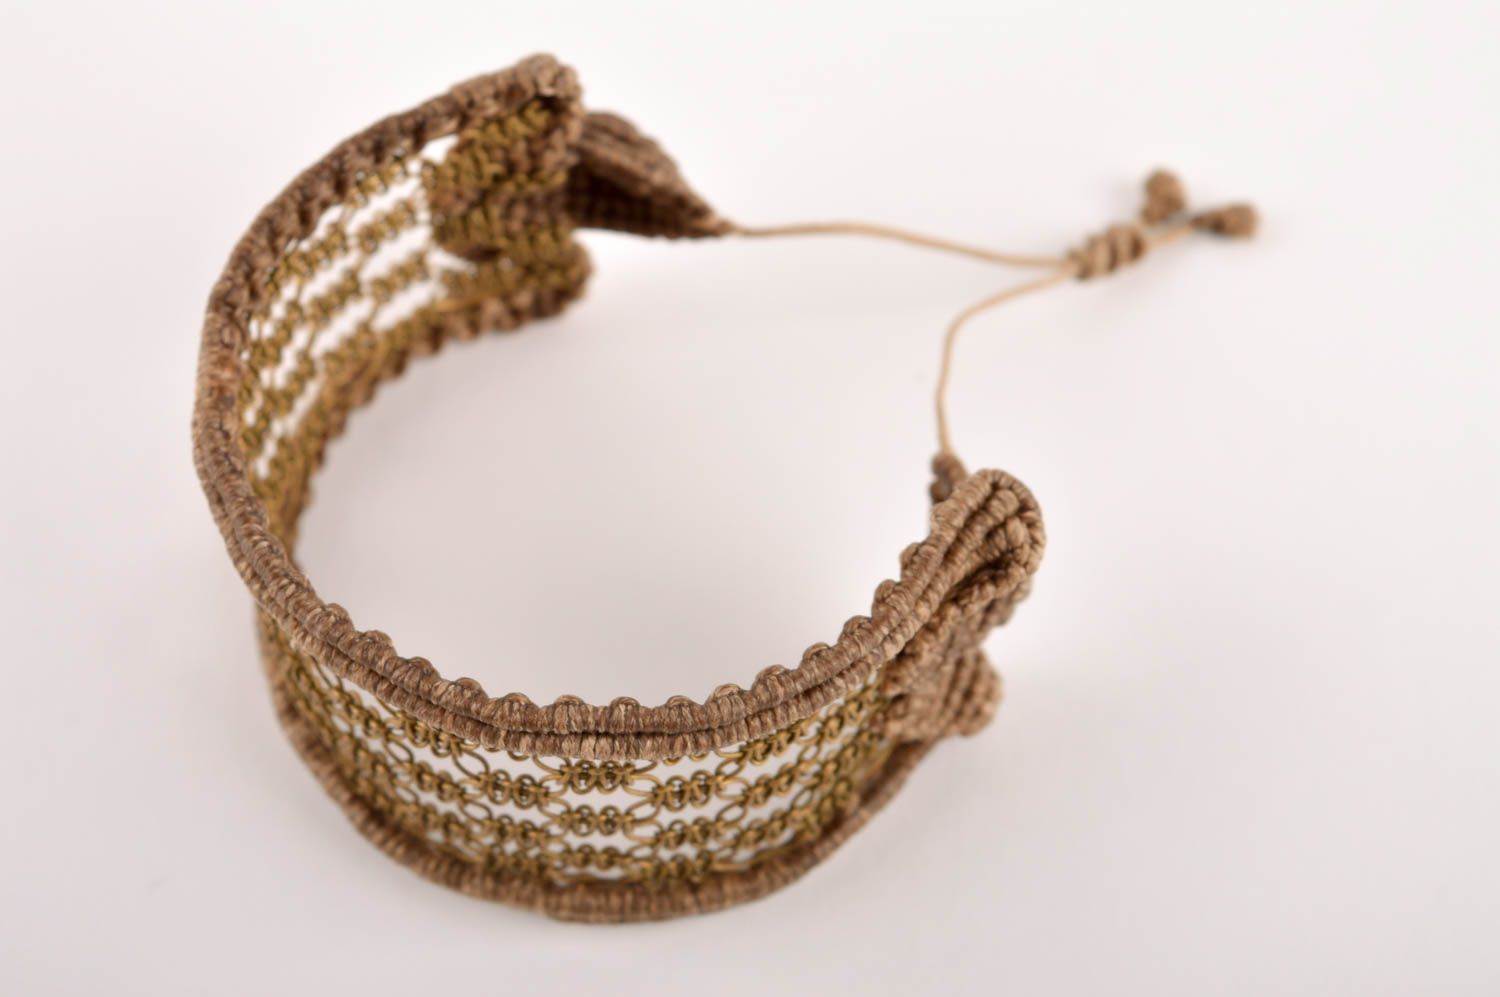 Unusual handmade metal bracelet woven macrame bracelet designs gifts for her photo 2